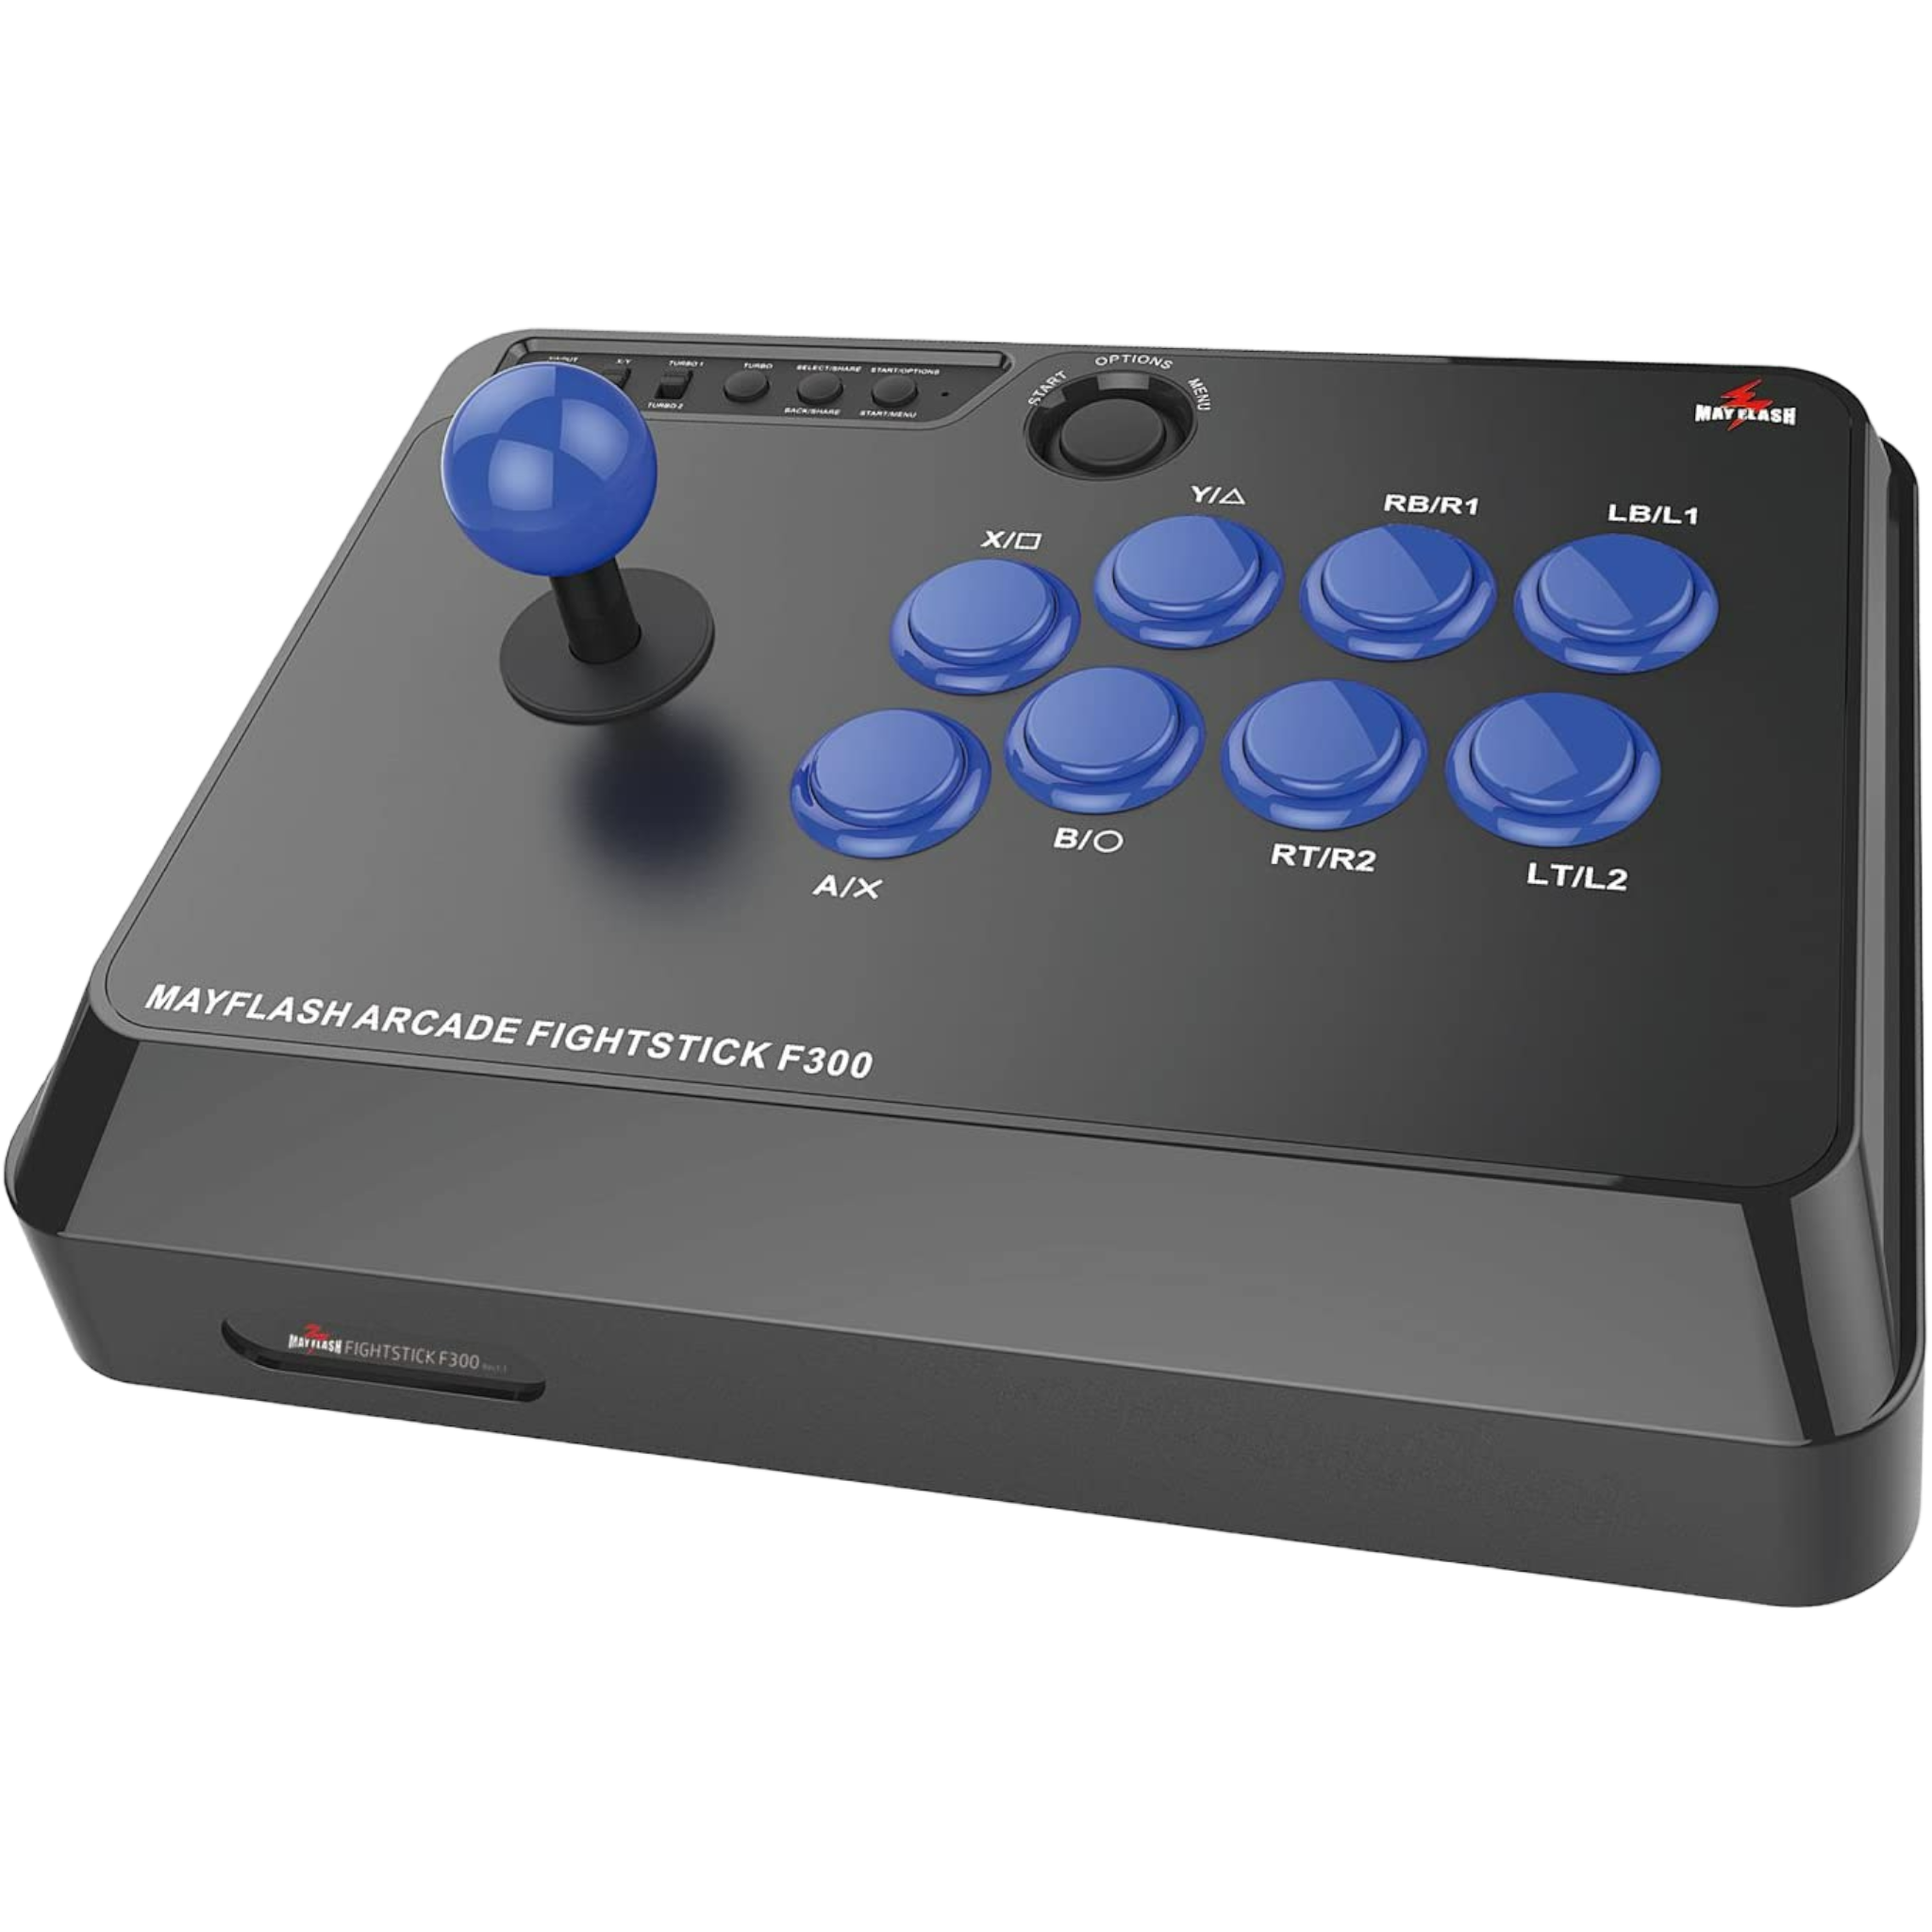 Mayflash F300 Arcade Fight Stick Joystick for PS4 PS3 XBOX ONE XBOX 360 PC Switch NeoGeo mini - Pro-Distributing